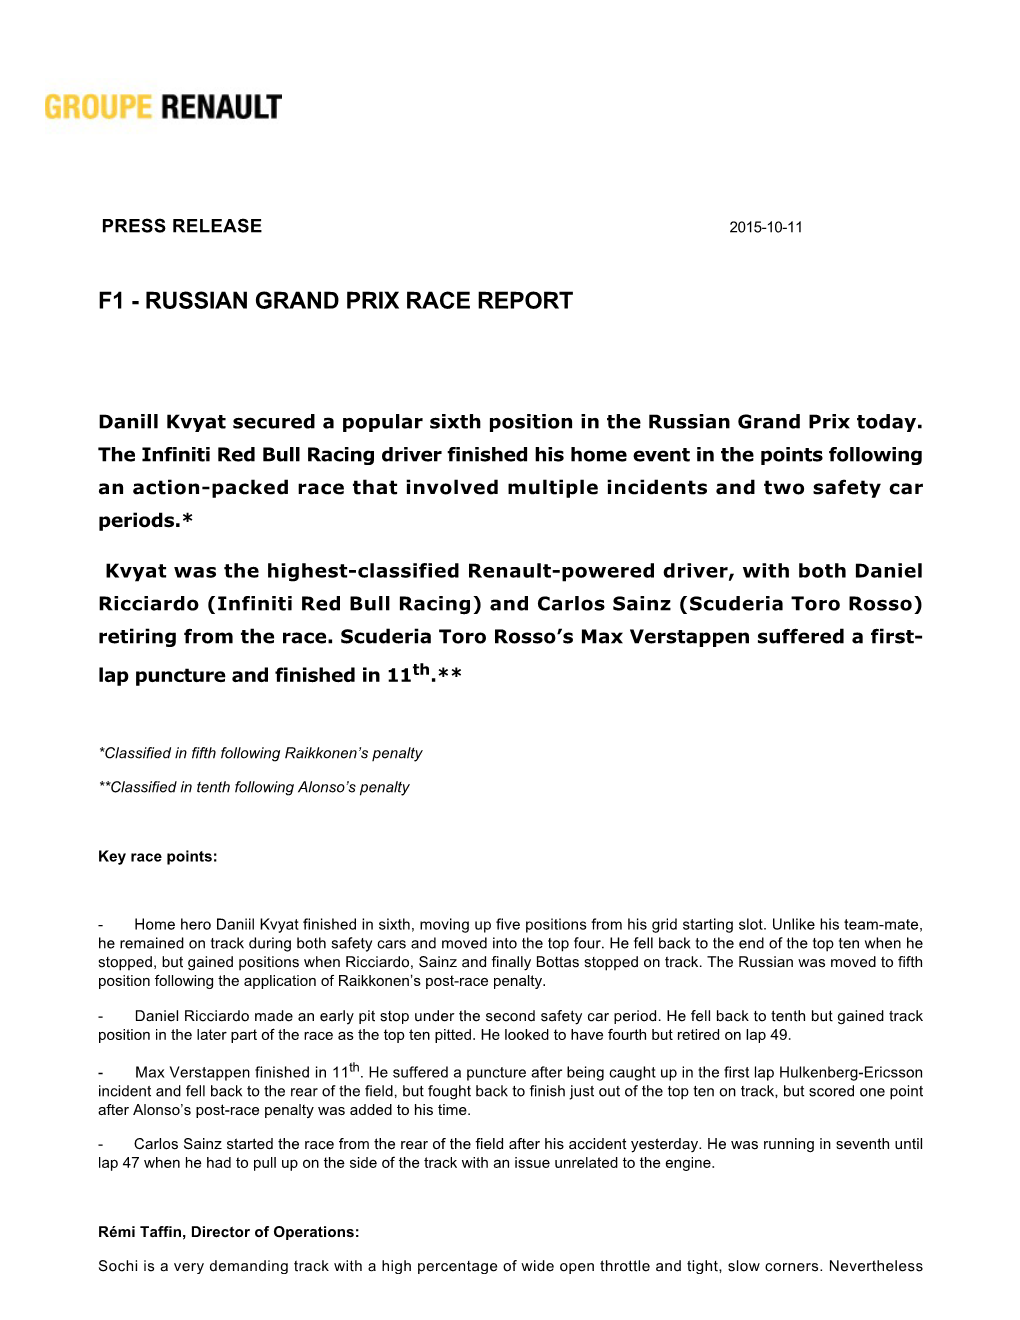 F1 Russian Grand Prix Race Report